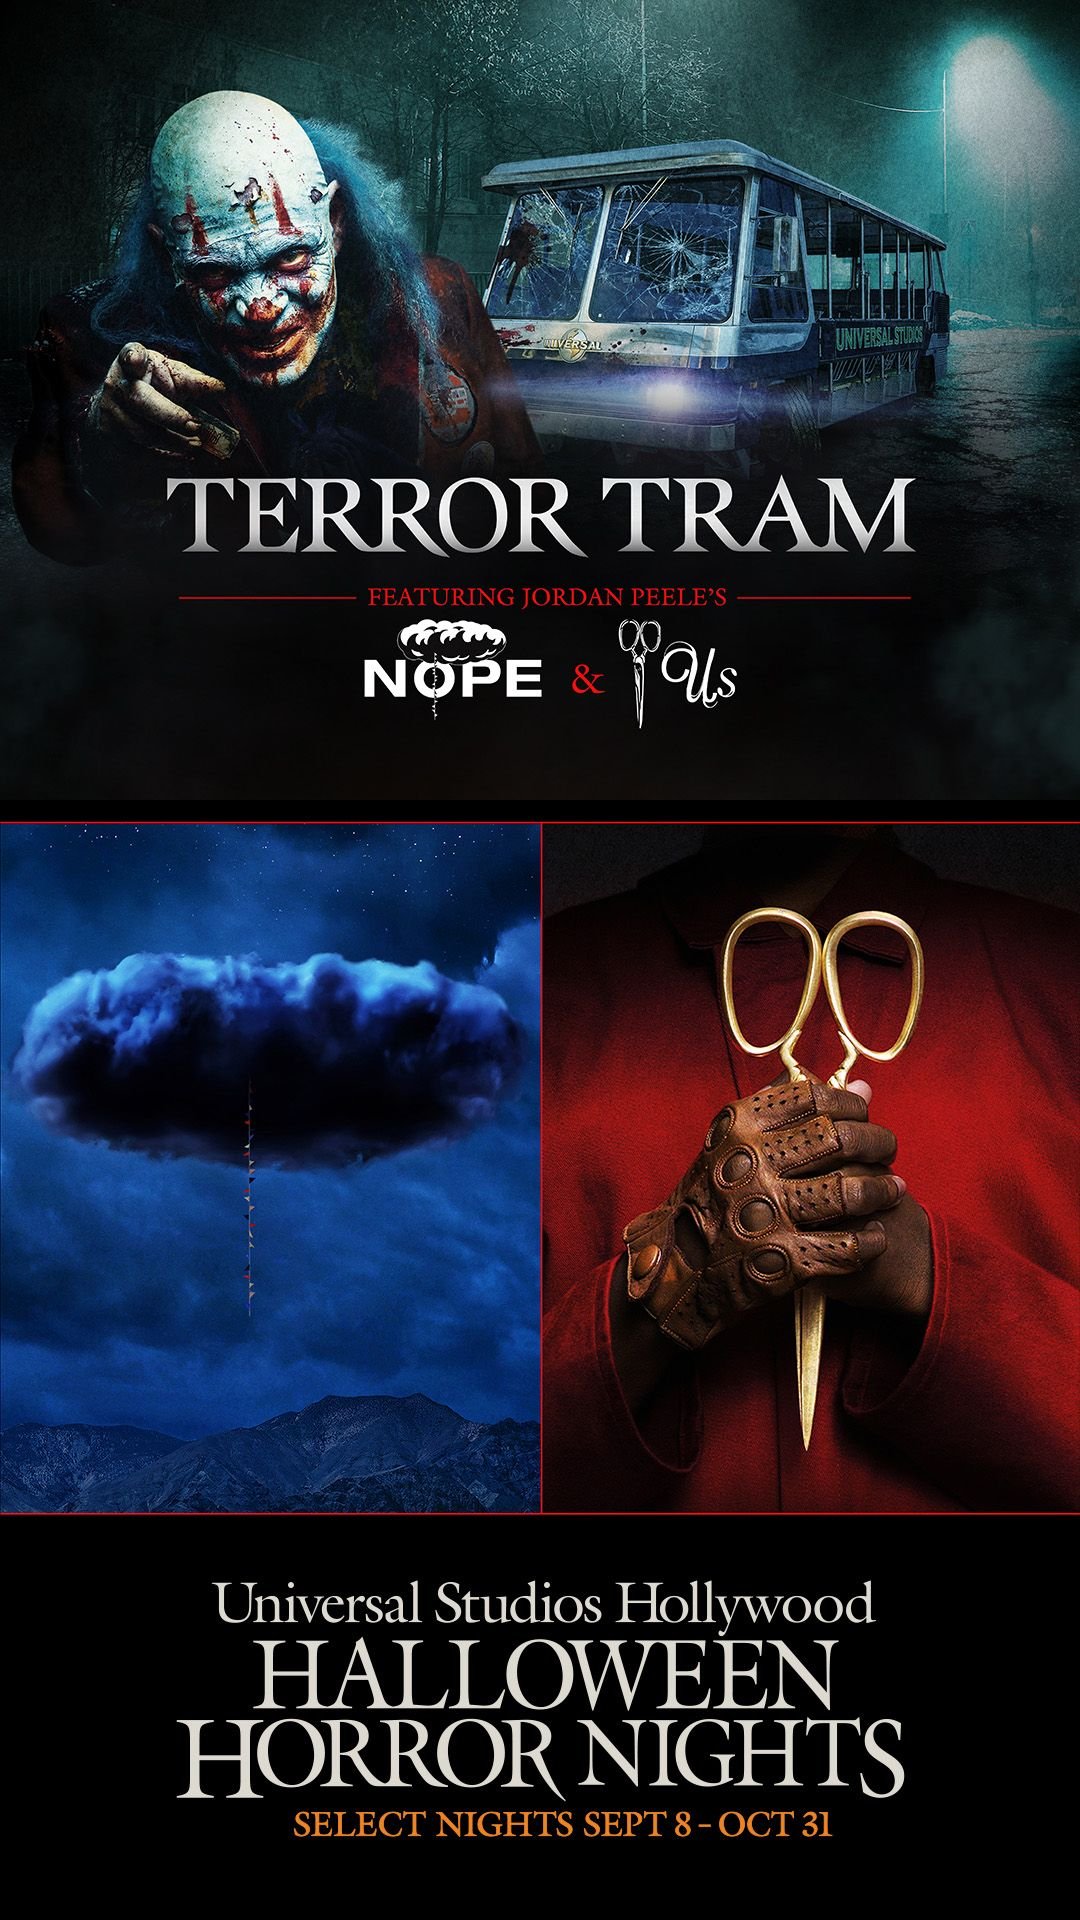 Universal's Halloween Horror Nights Announces Terror Tram Will Focus on